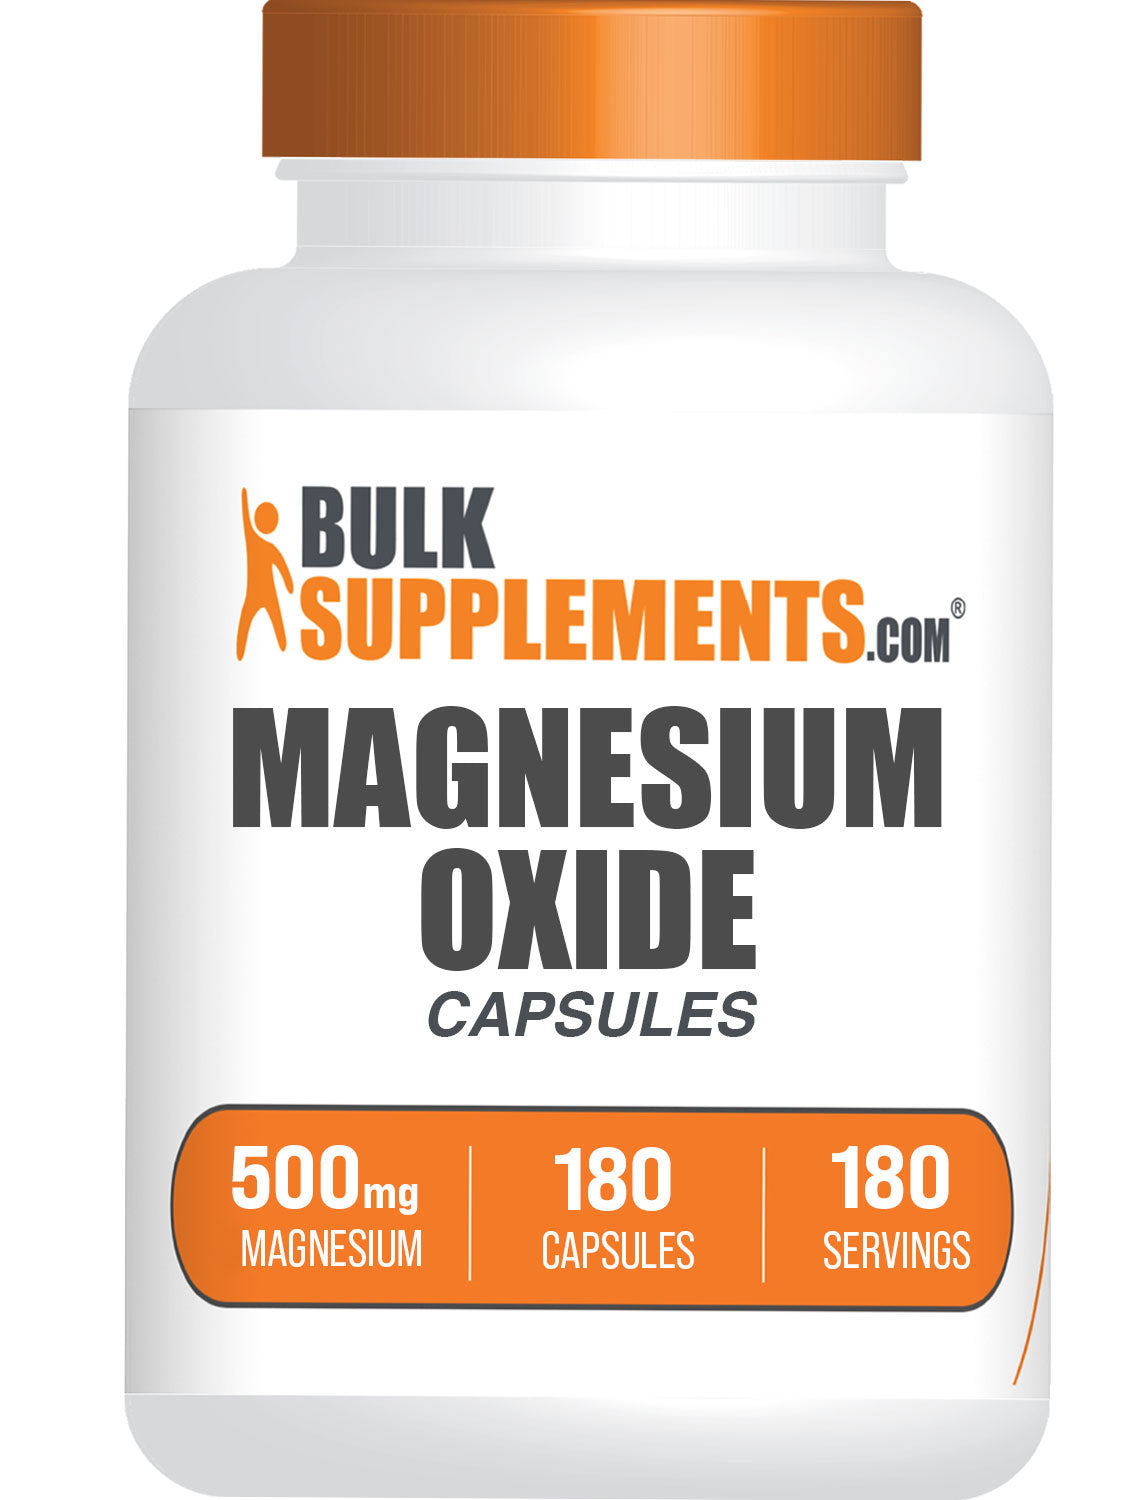 BulkSupplements.com Magnesium Oxide Capsules 180 ct Bottle